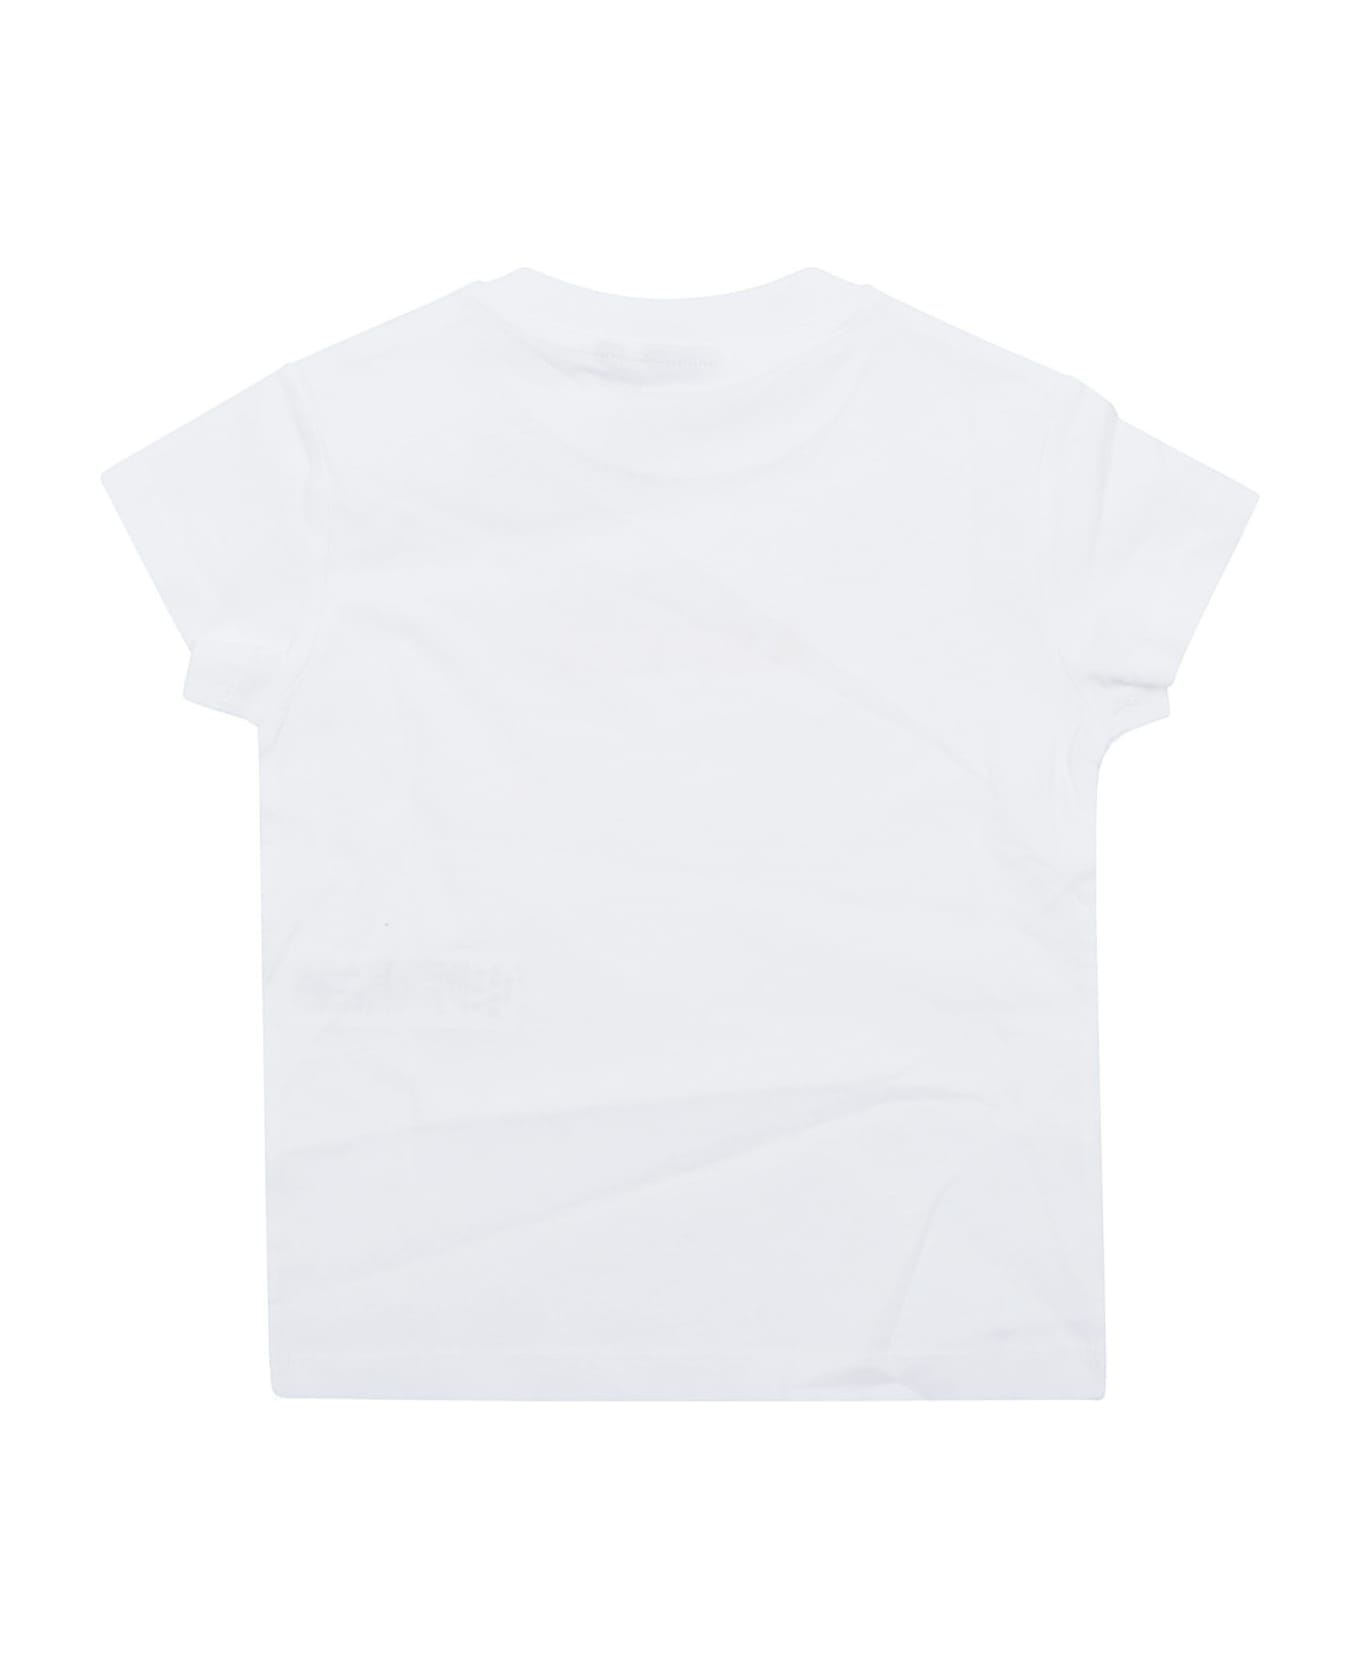 Aspesi T-shirt M/corta - Bianco Giallo Mimosa